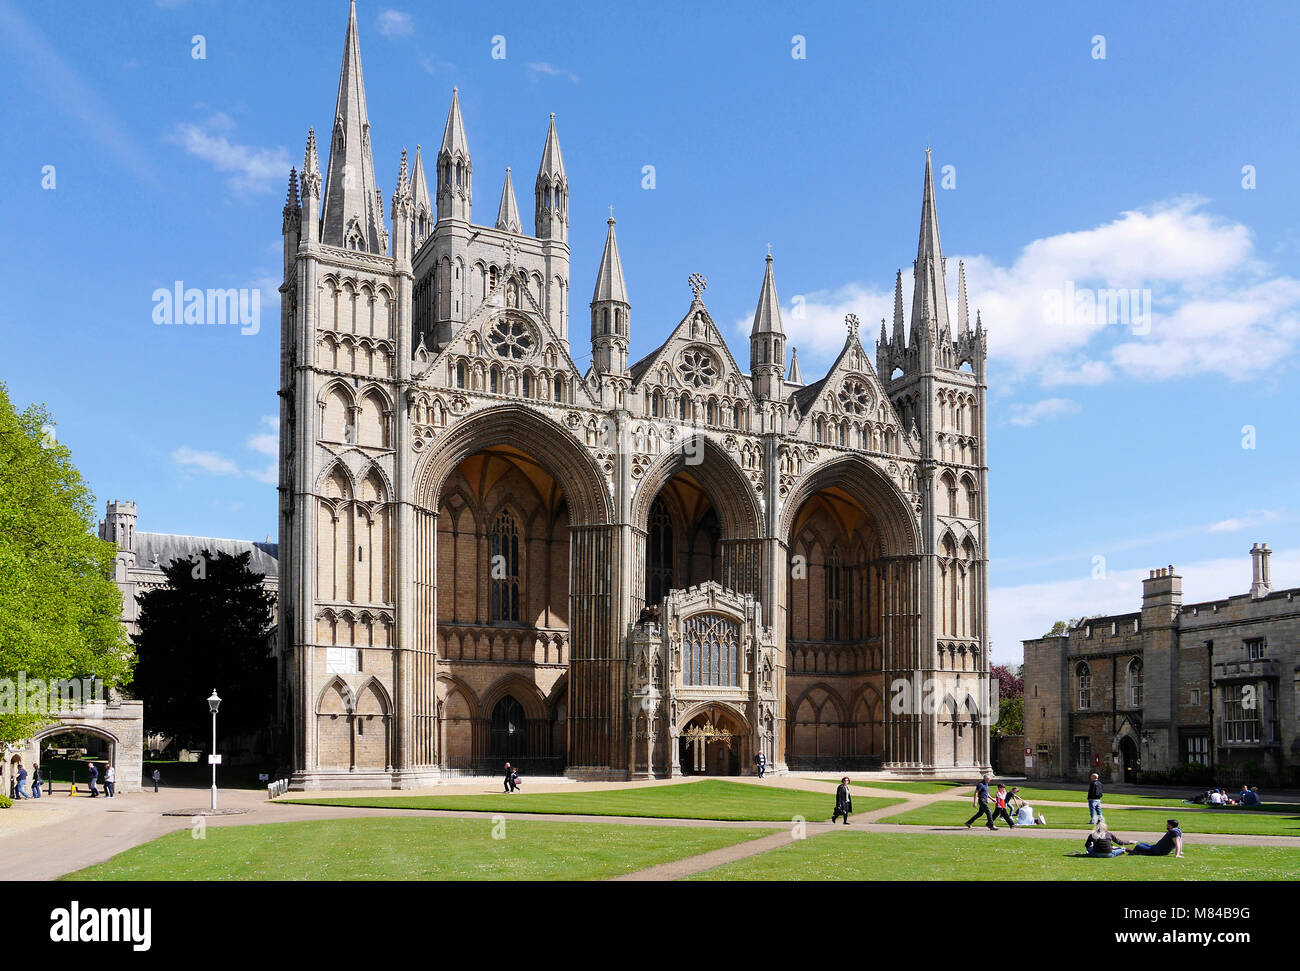 La catedral de Peterborough, Cambridgeshire, Inglaterra, Reino Unido. Foto de stock